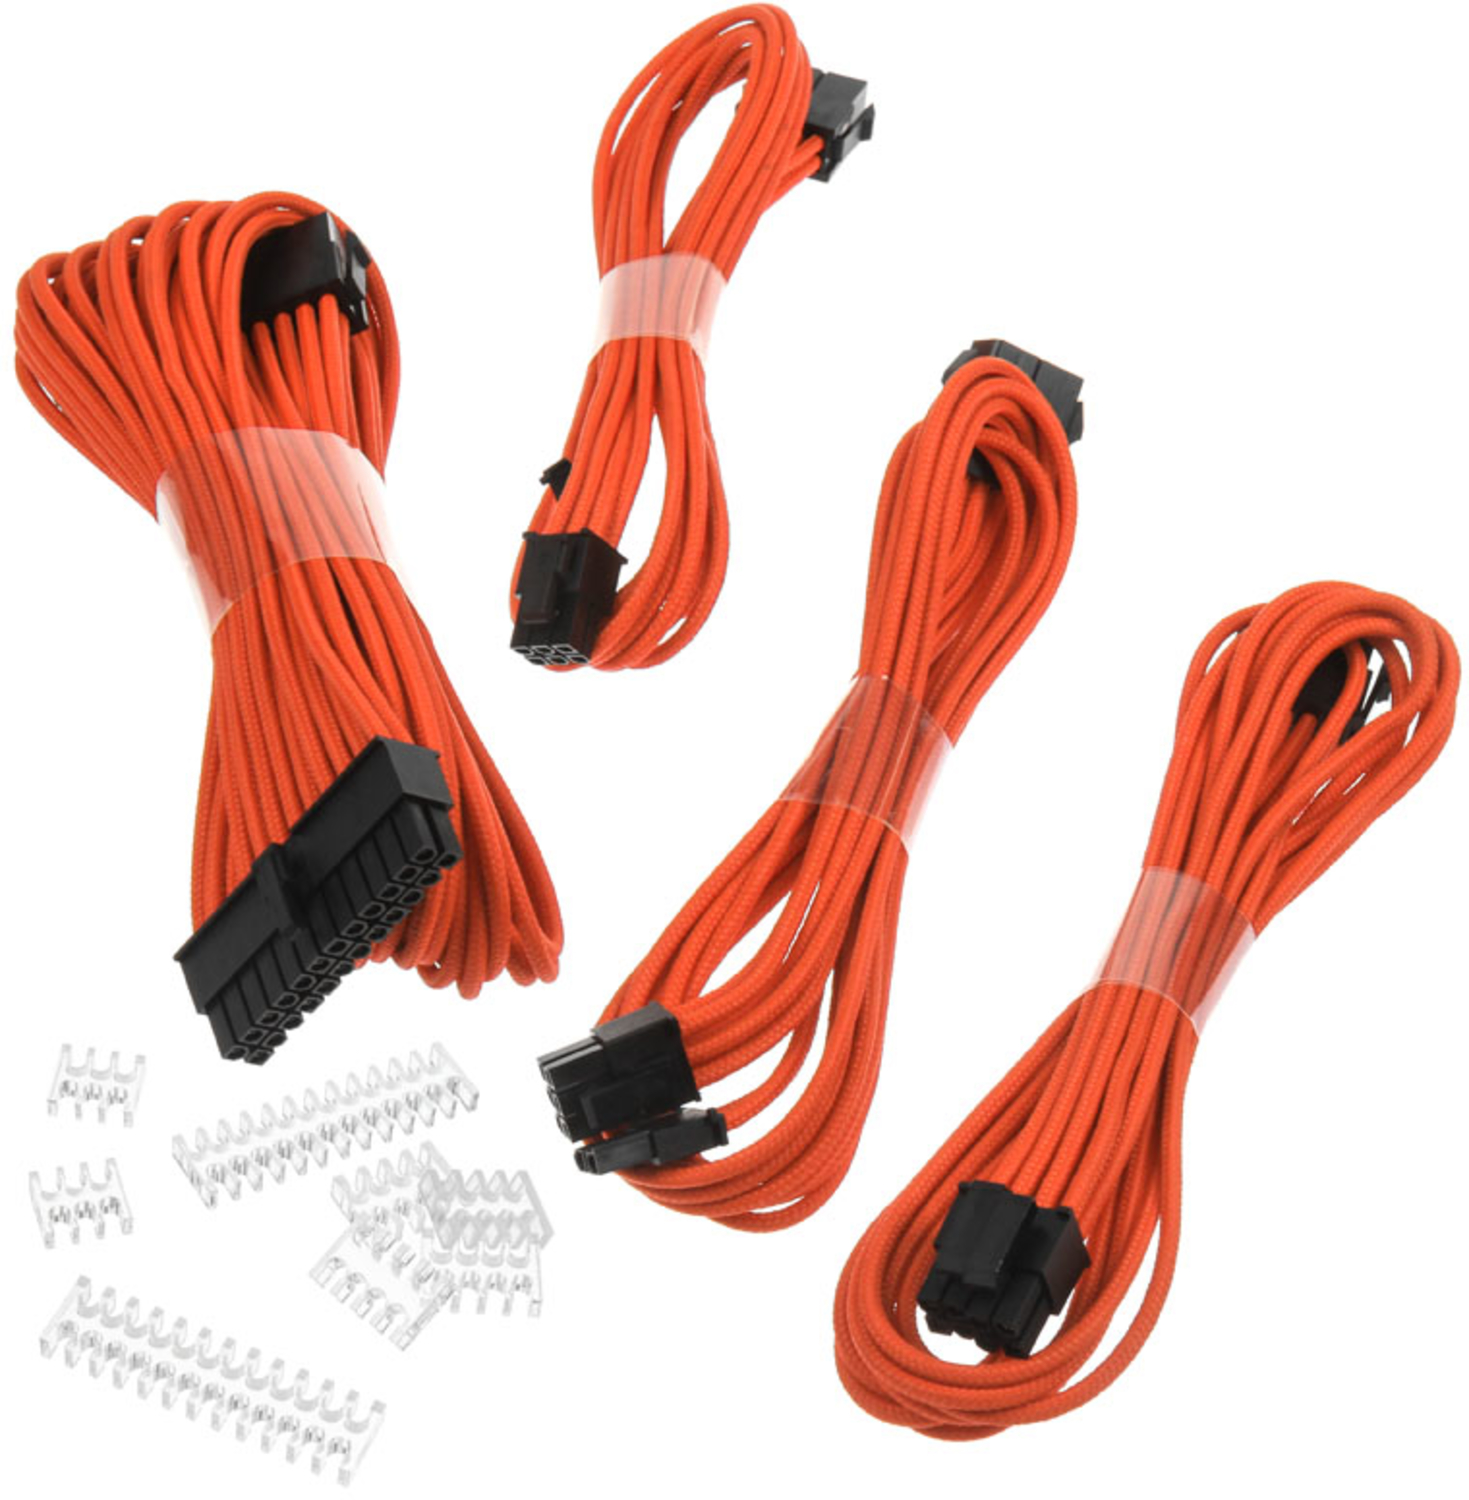 Kit de Expansión Phanteks Cables Sleeved 50cm Naranja